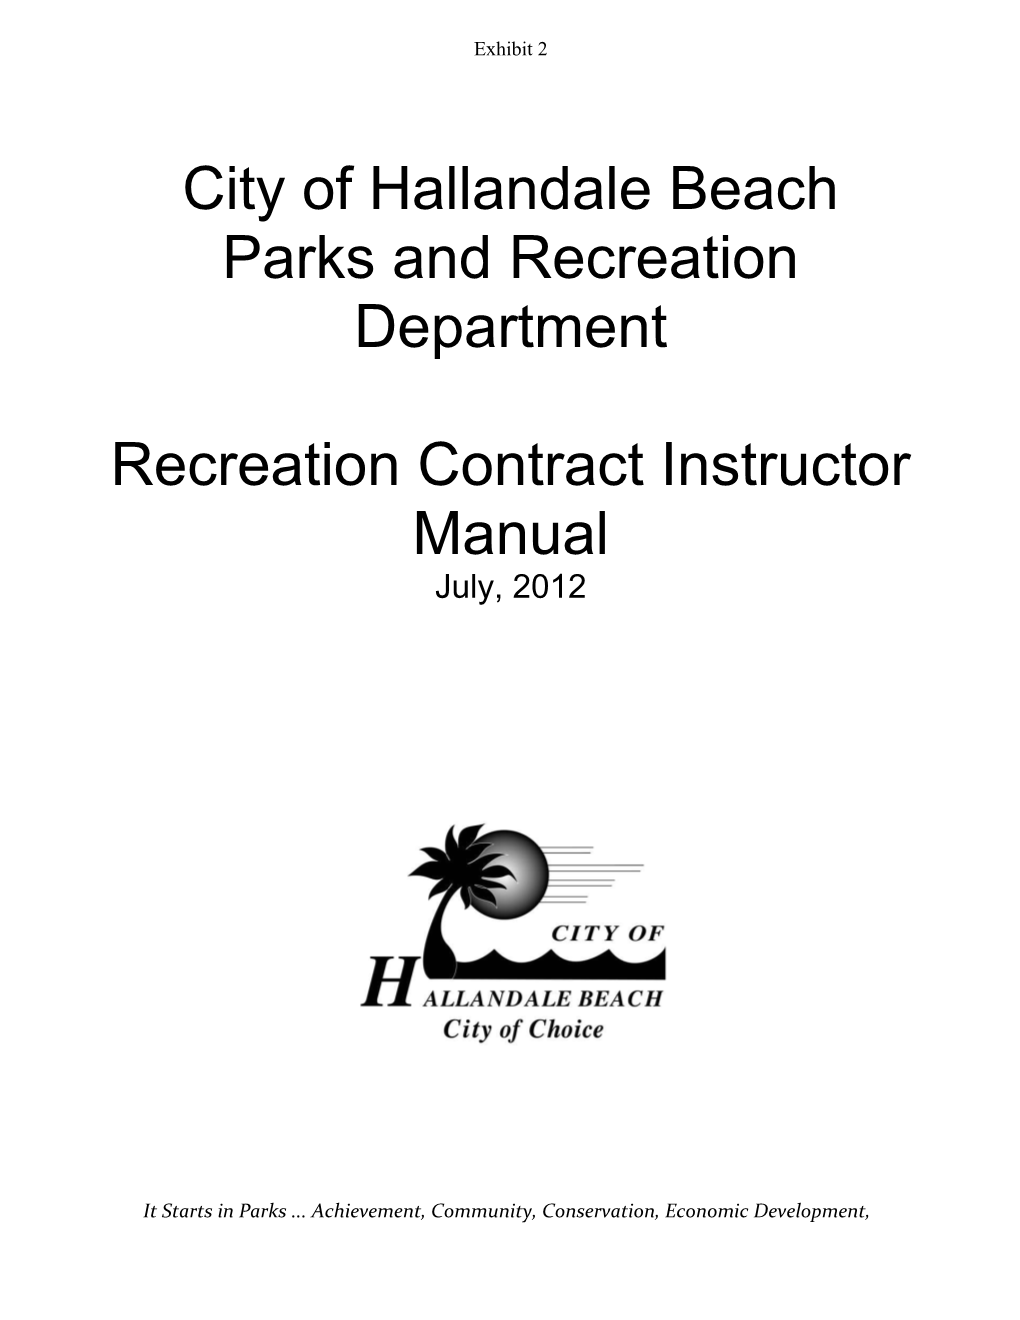 Recreation Instructor Handbook